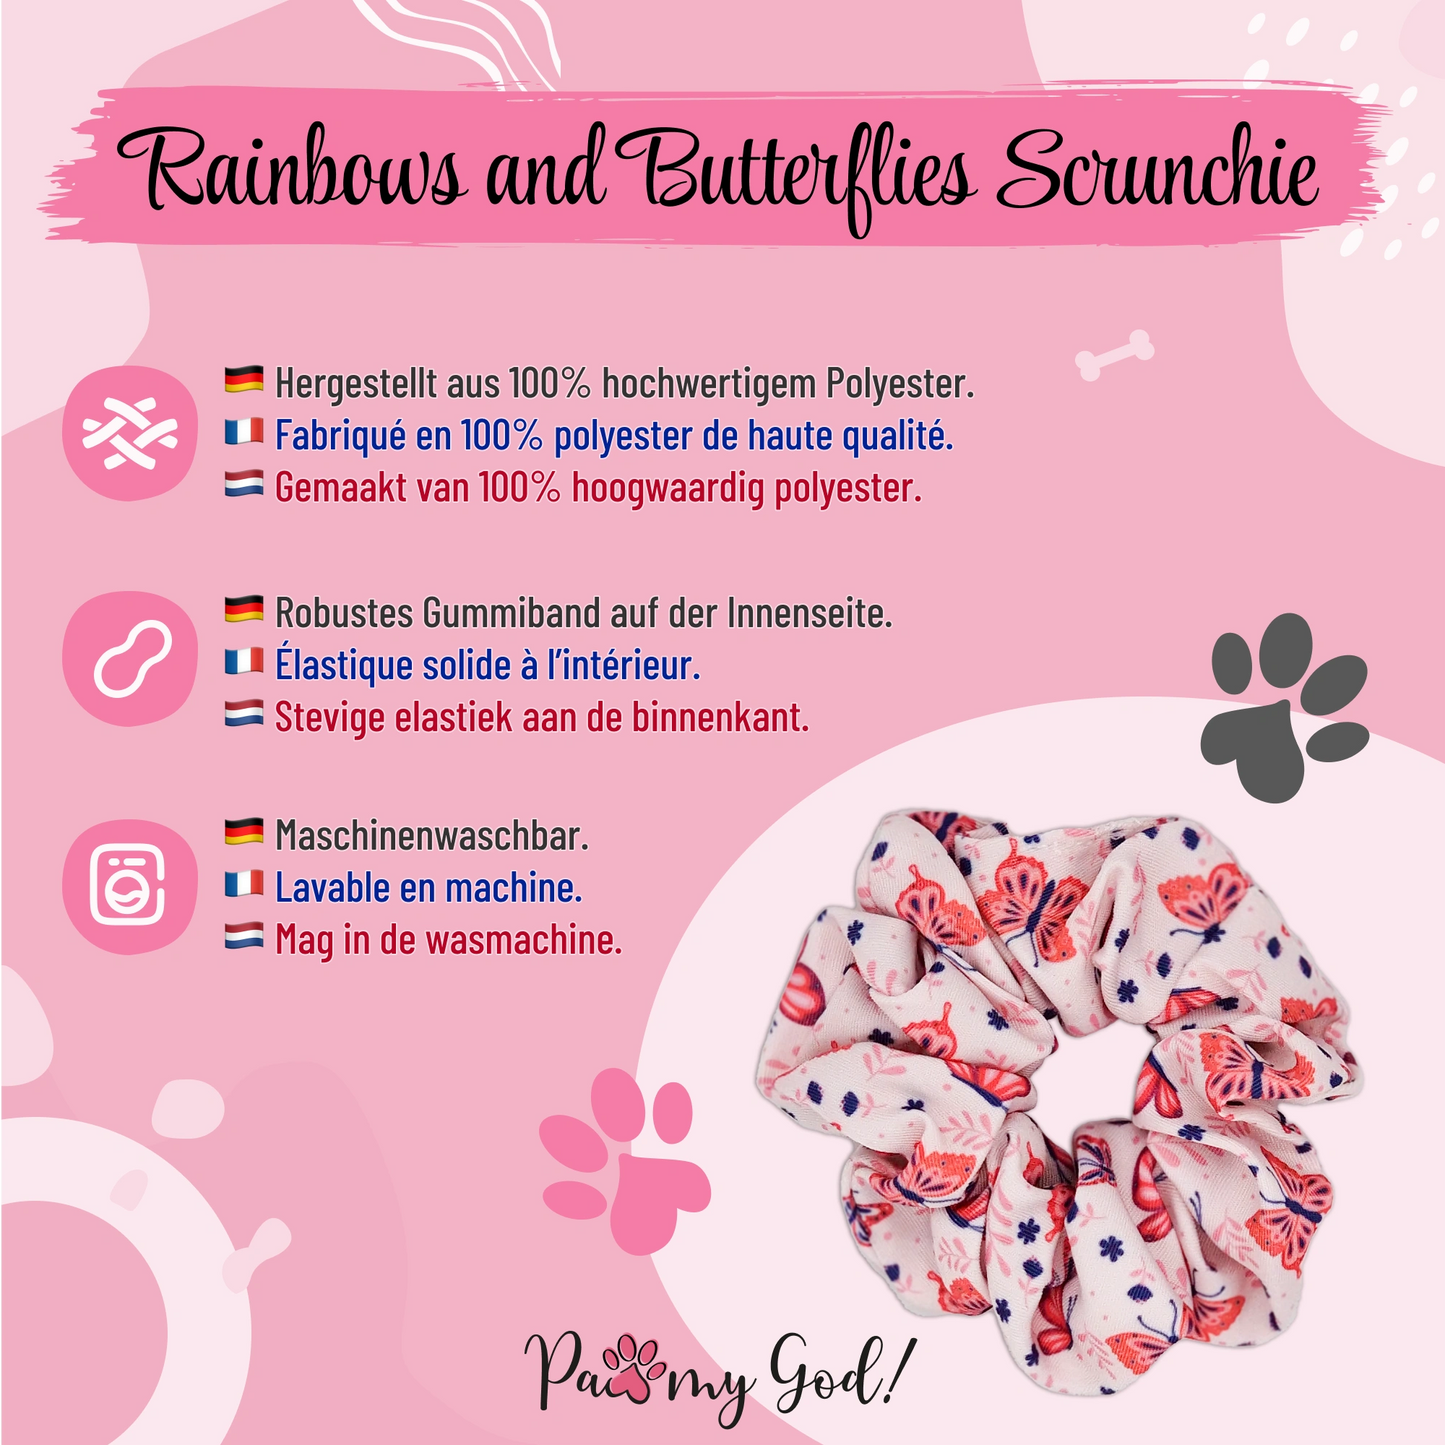 Rainbows and Butterflies Scrunchie